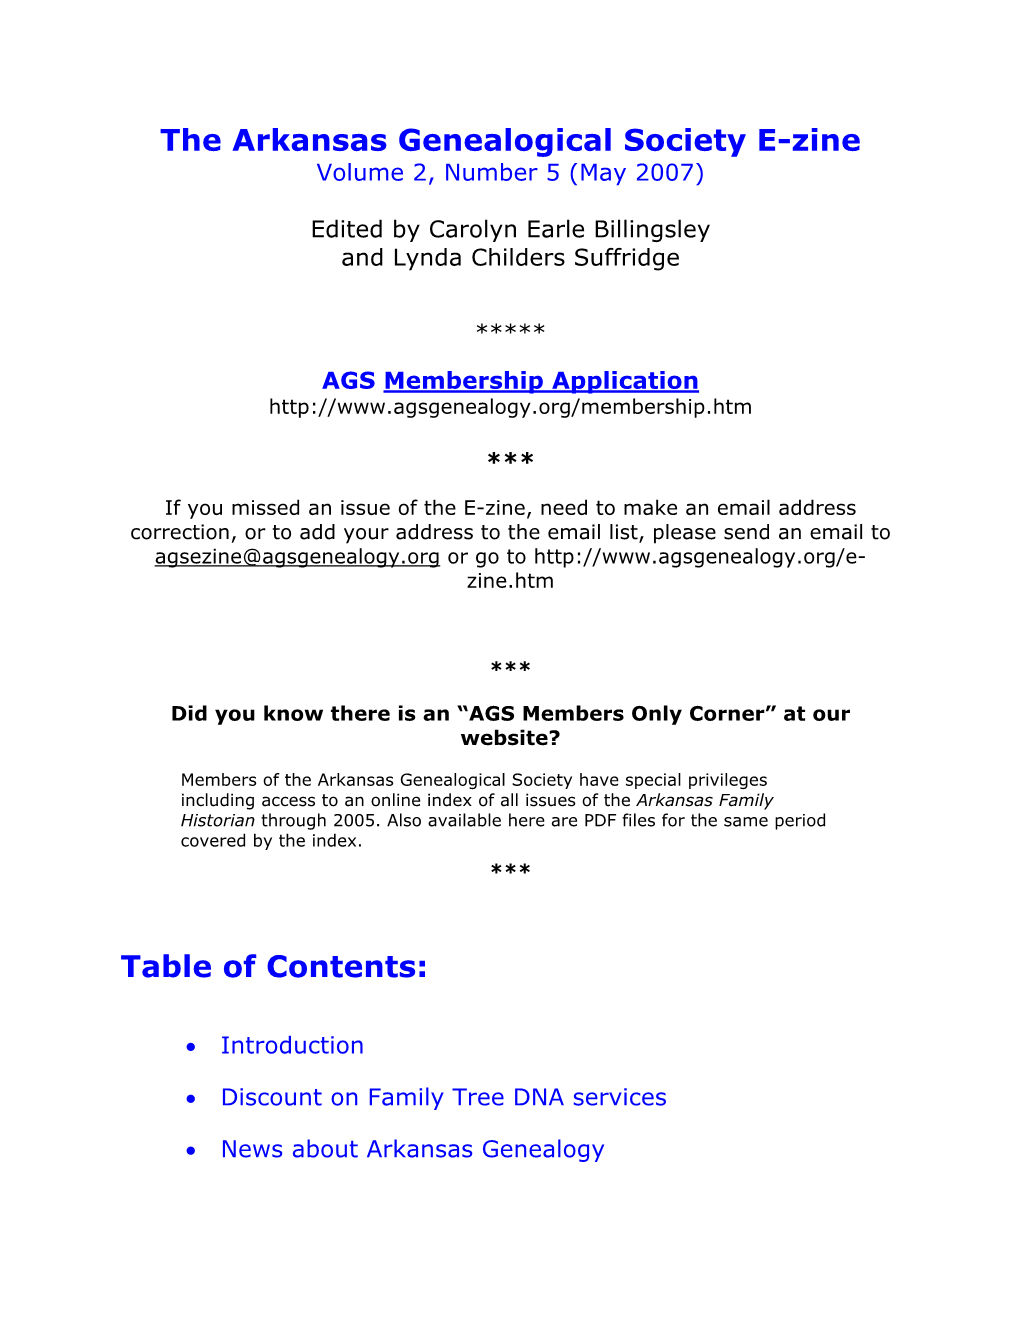 The Arkansas Genealogical Society E-Zine Volume 2, Number 5 (May 2007)